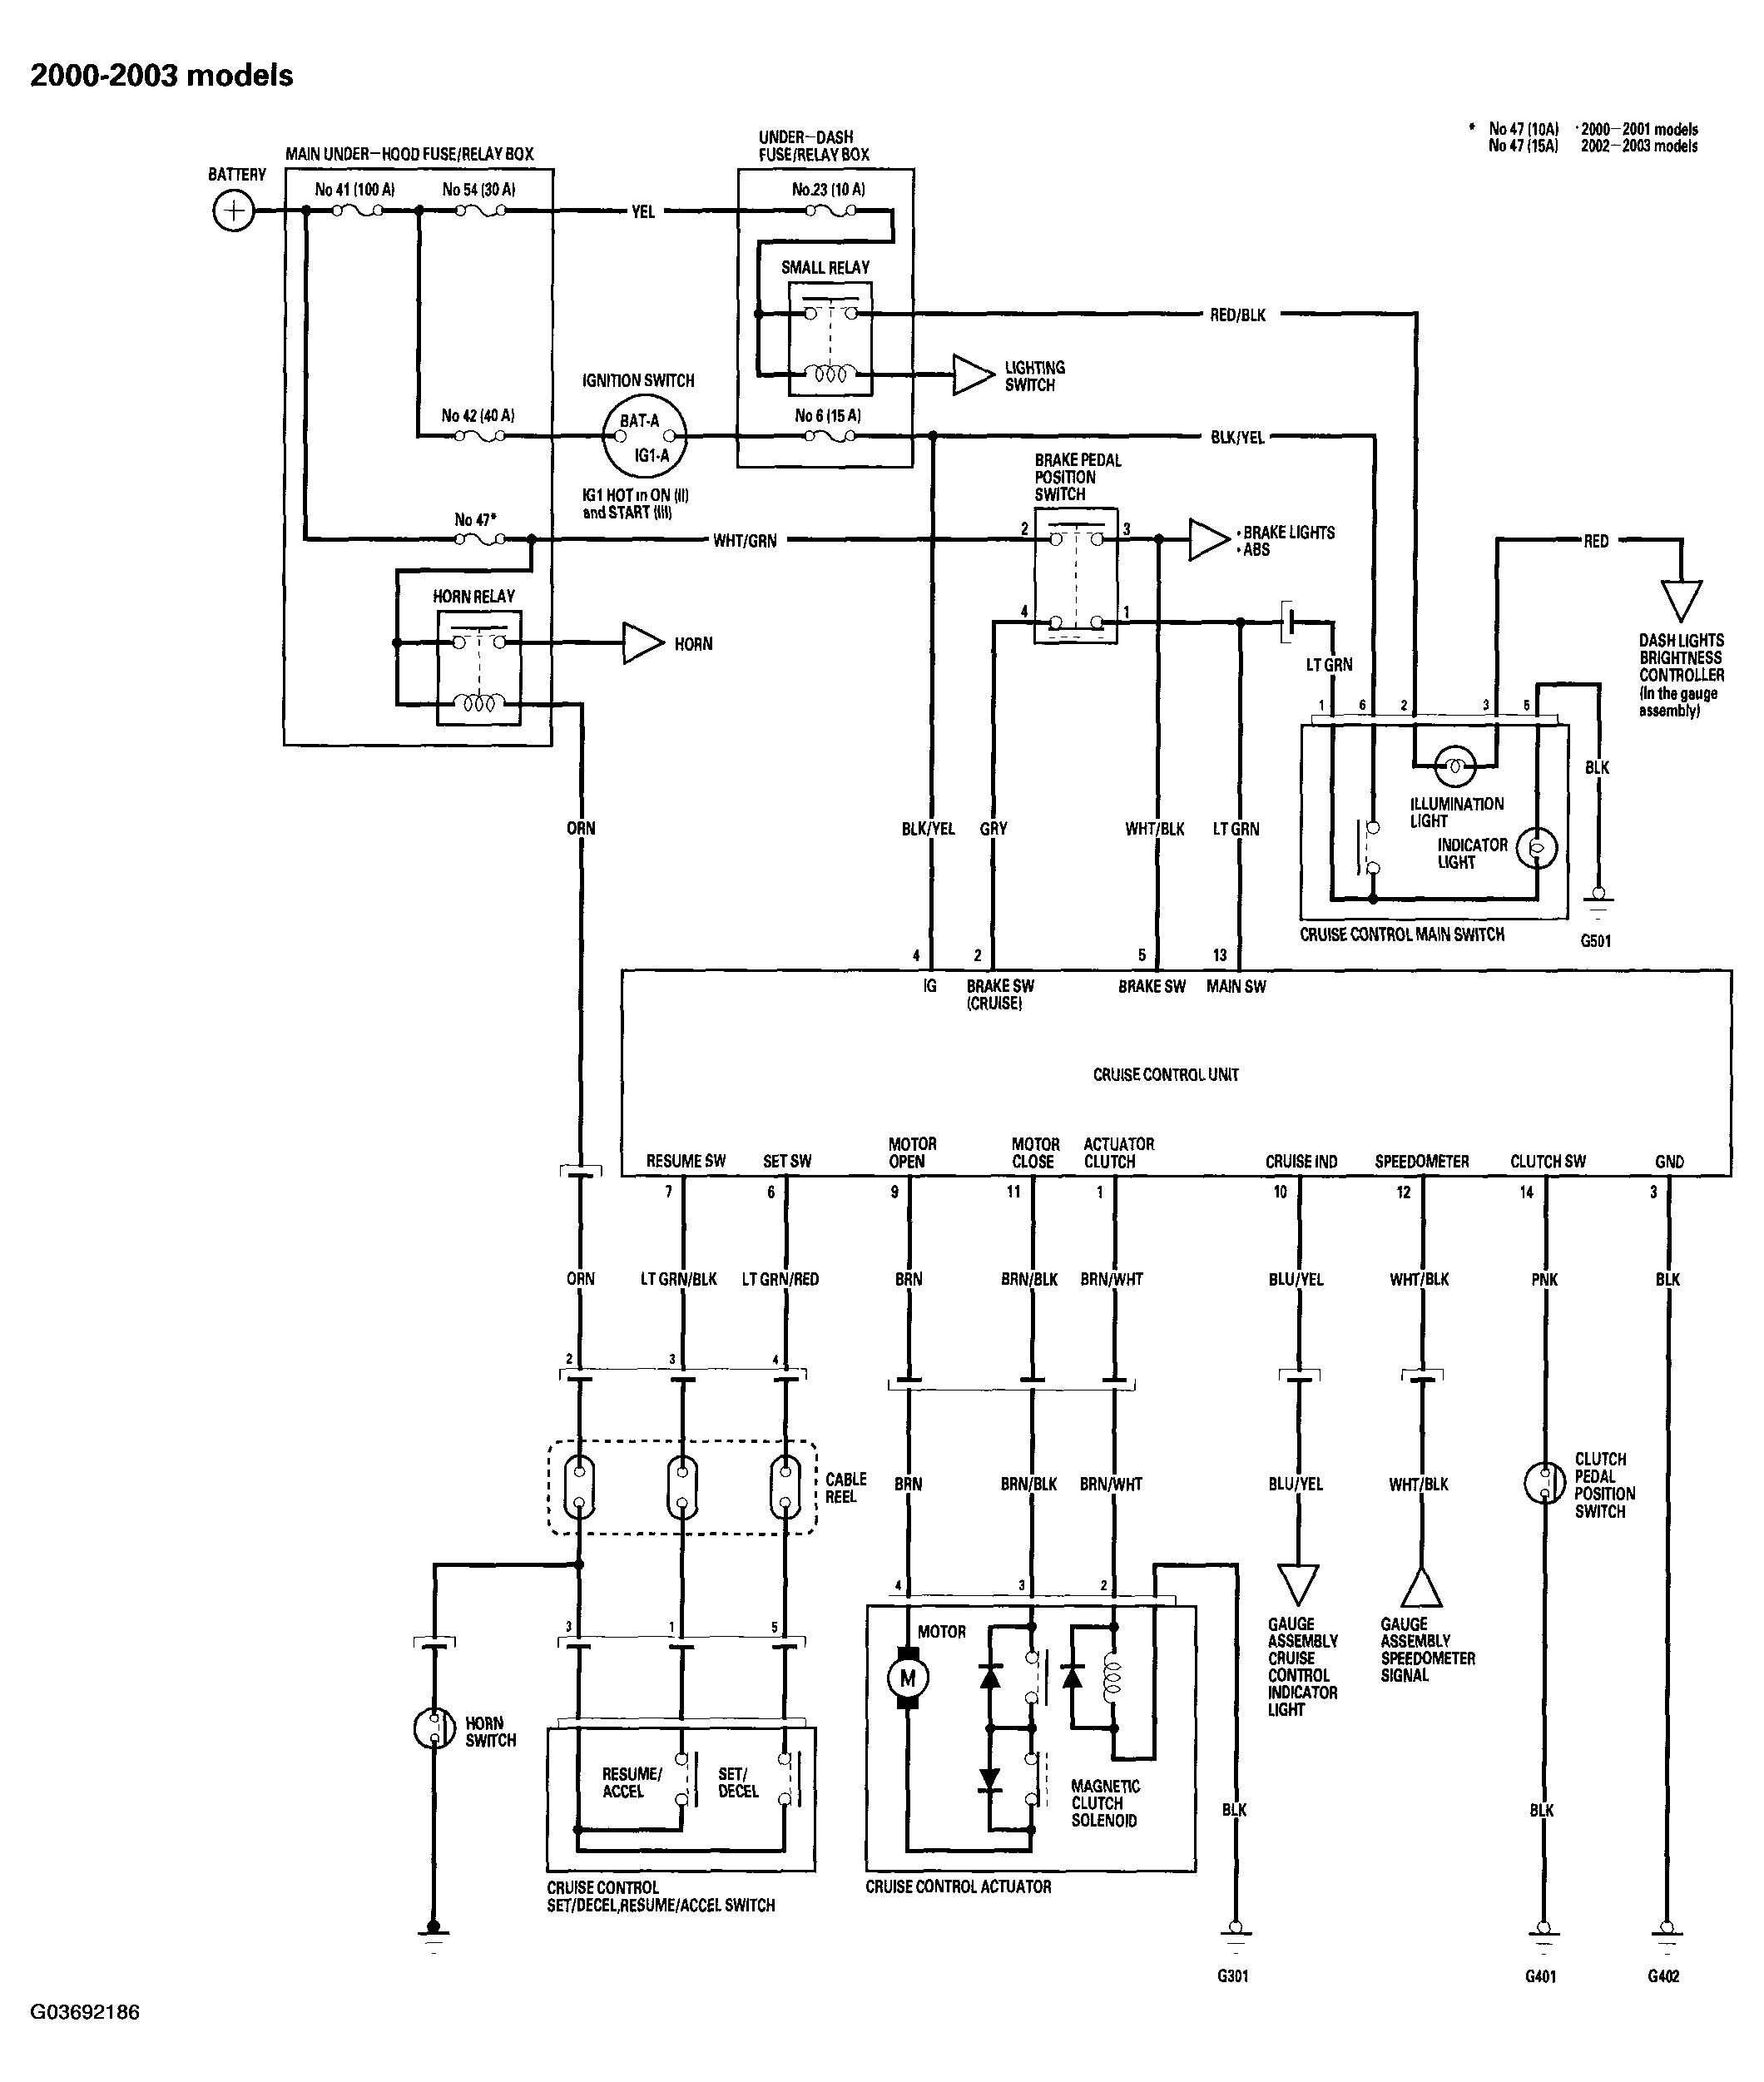 2001 Honda Crv Engine Diagram 2003 Honda S2000 Fuse Diagram Wiring Diagram Of 2001 Honda Crv Engine Diagram